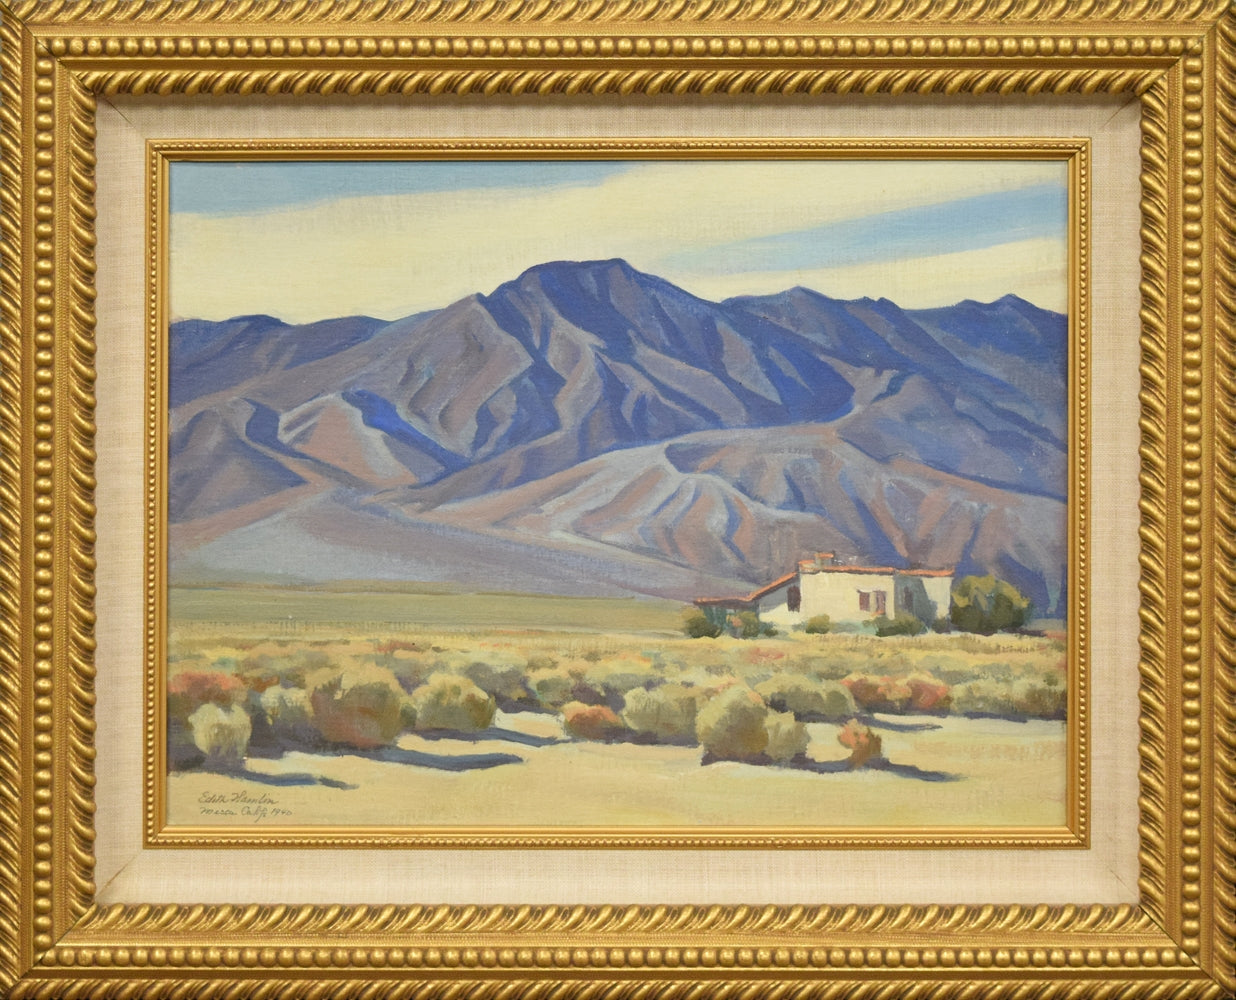 SOLD Edith Hamlin (1902-1992) - Santa Rosas in the Morning c. 1940s